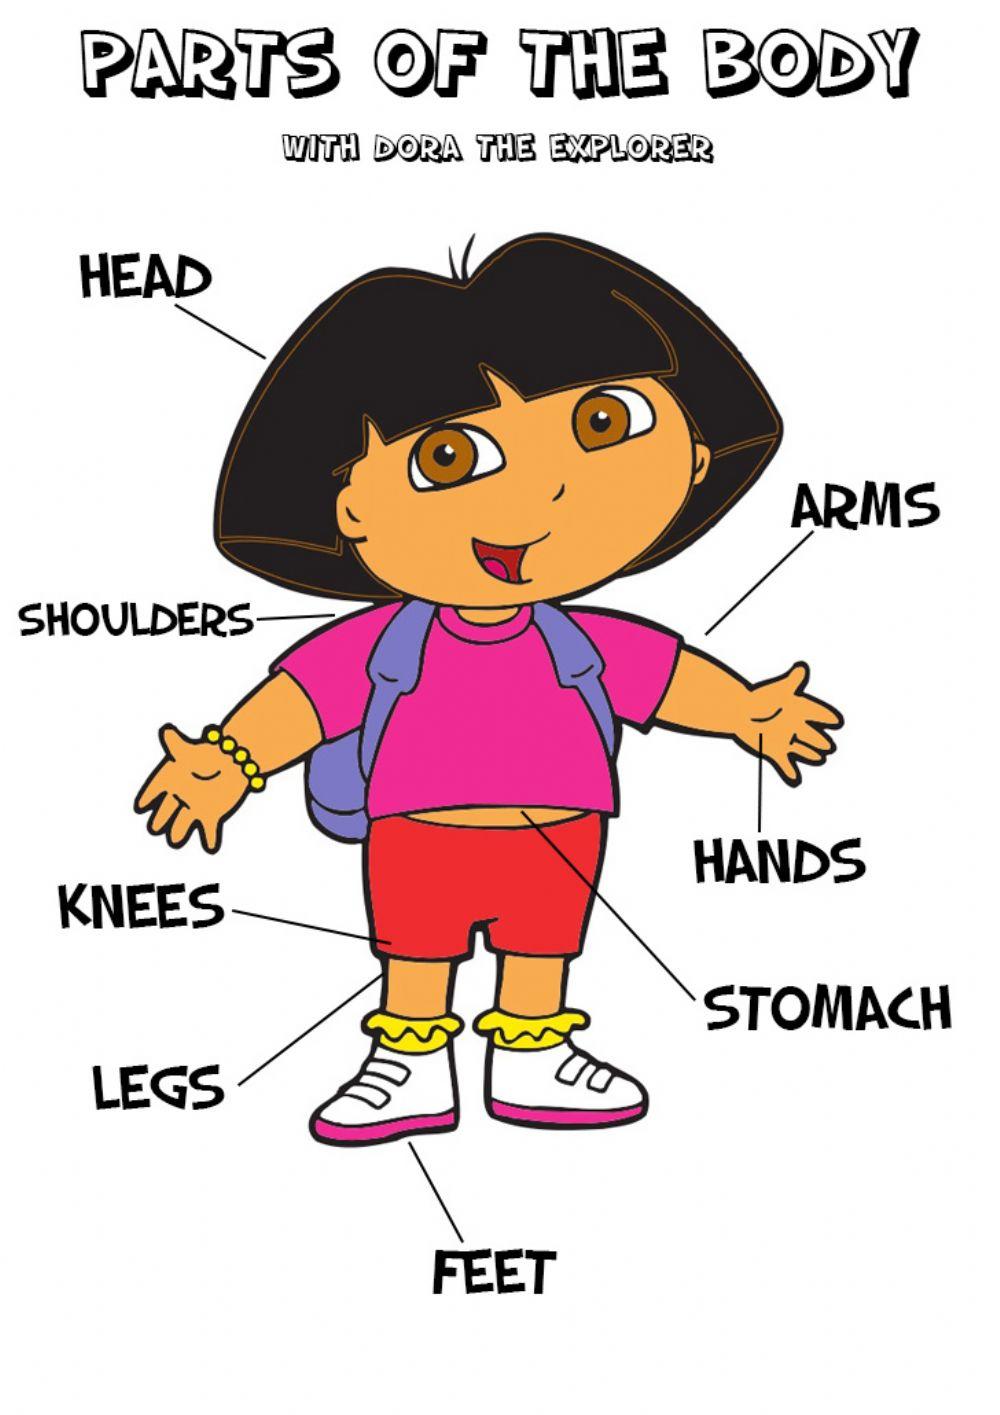 Parts of the Body - Dora the explorer